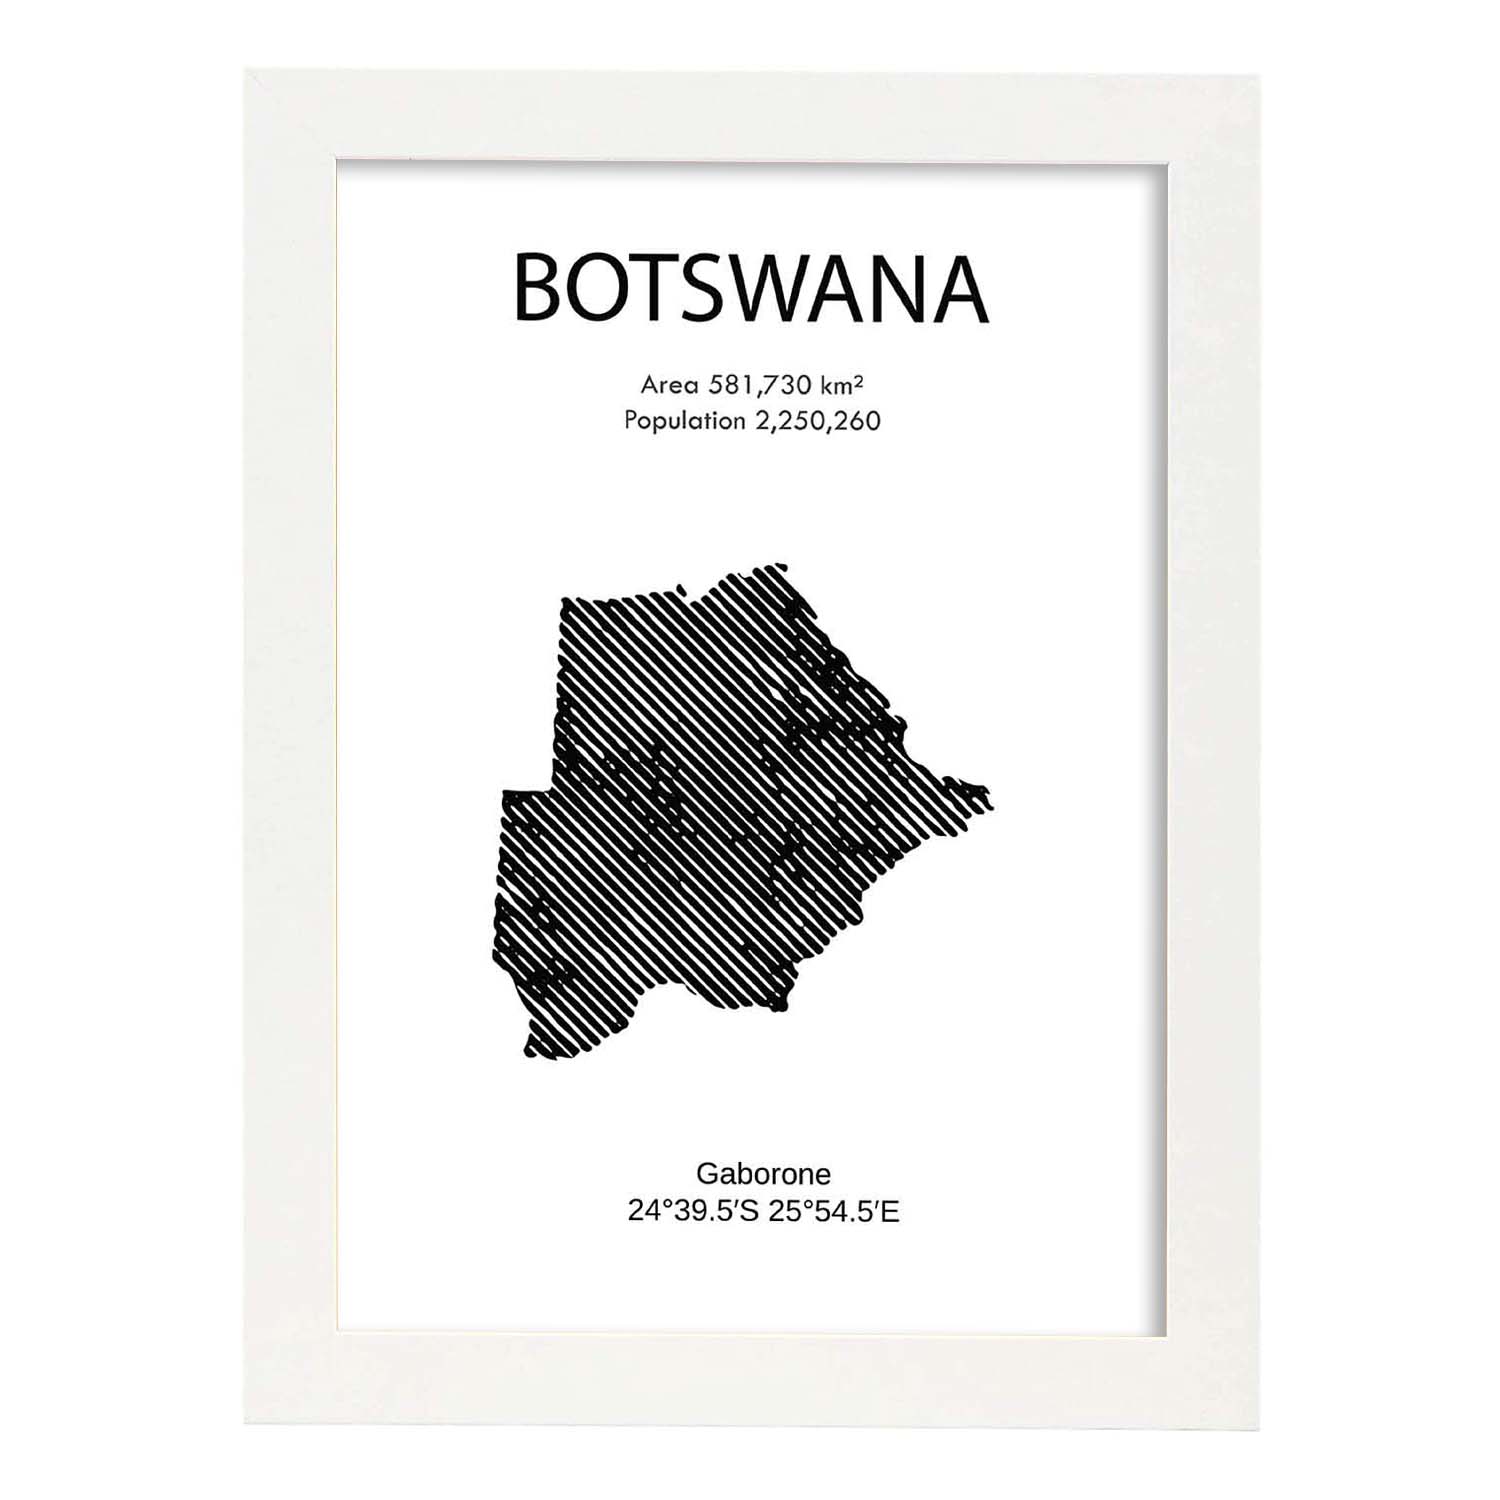 Poster de Botswana. Láminas de paises y continentes del mundo.-Artwork-Nacnic-A4-Marco Blanco-Nacnic Estudio SL